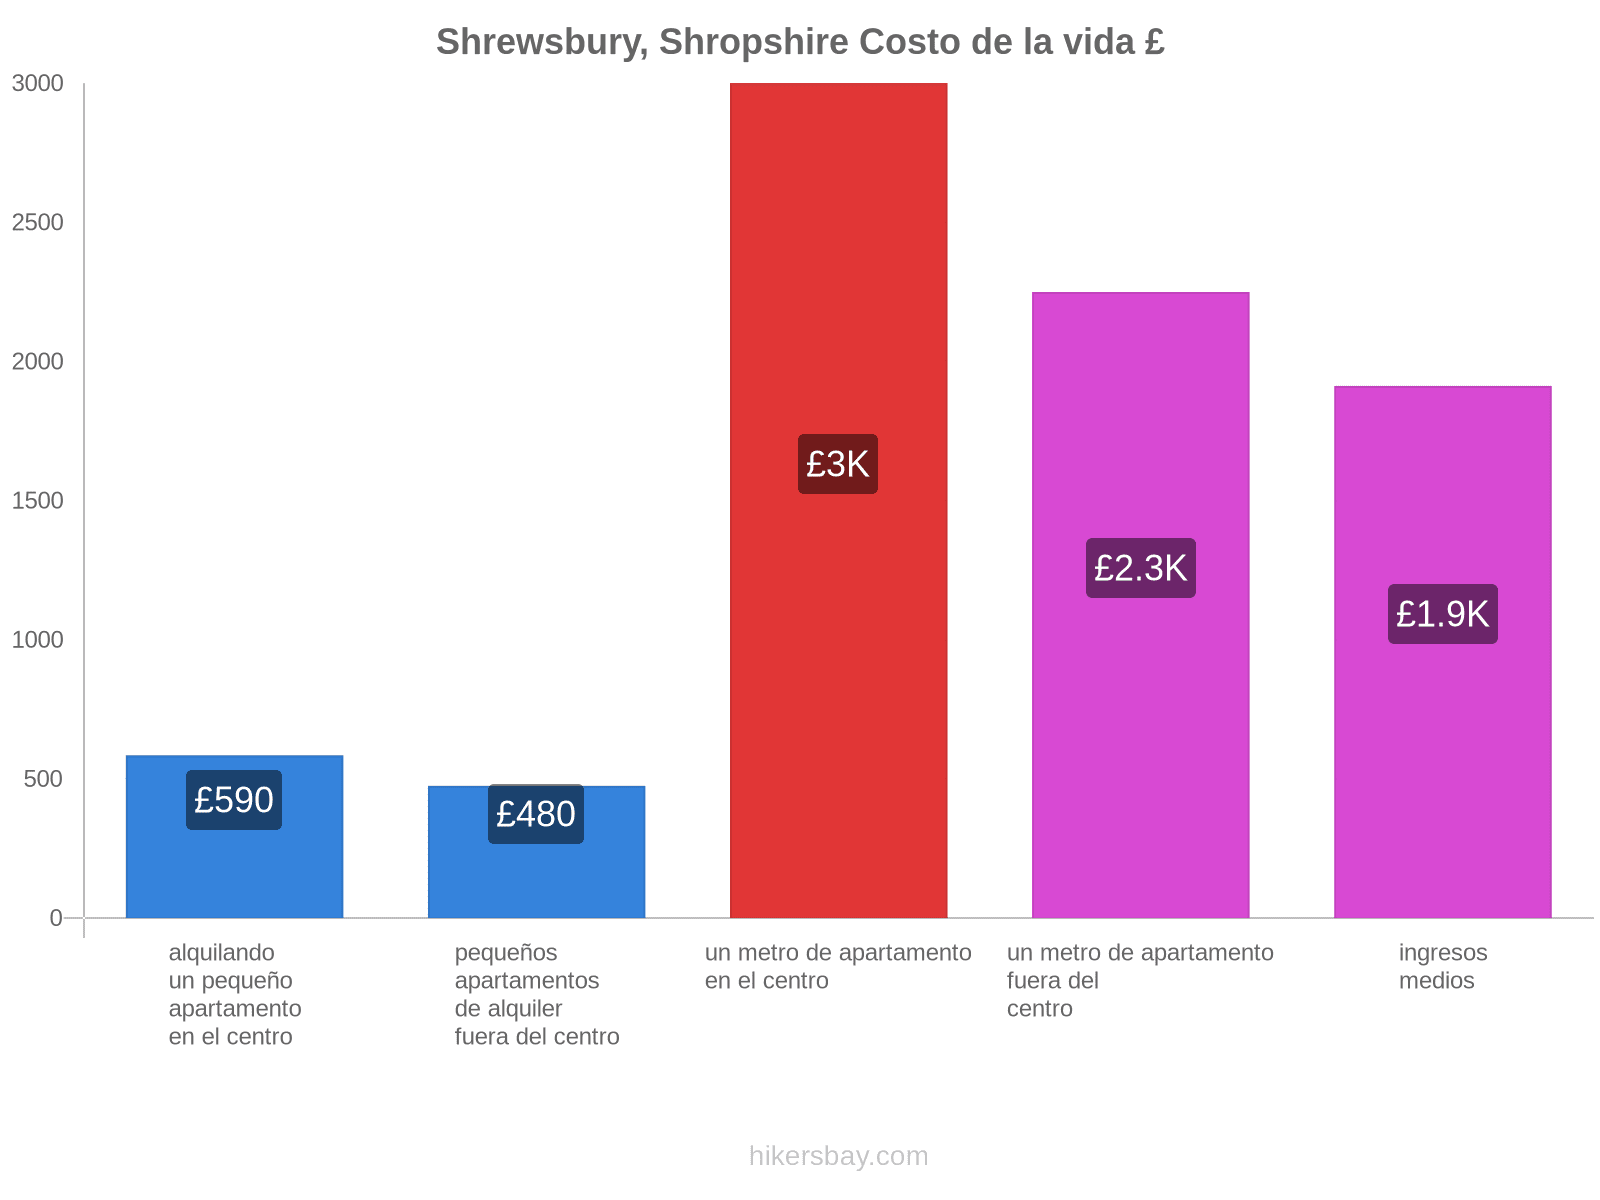 Shrewsbury, Shropshire costo de la vida hikersbay.com